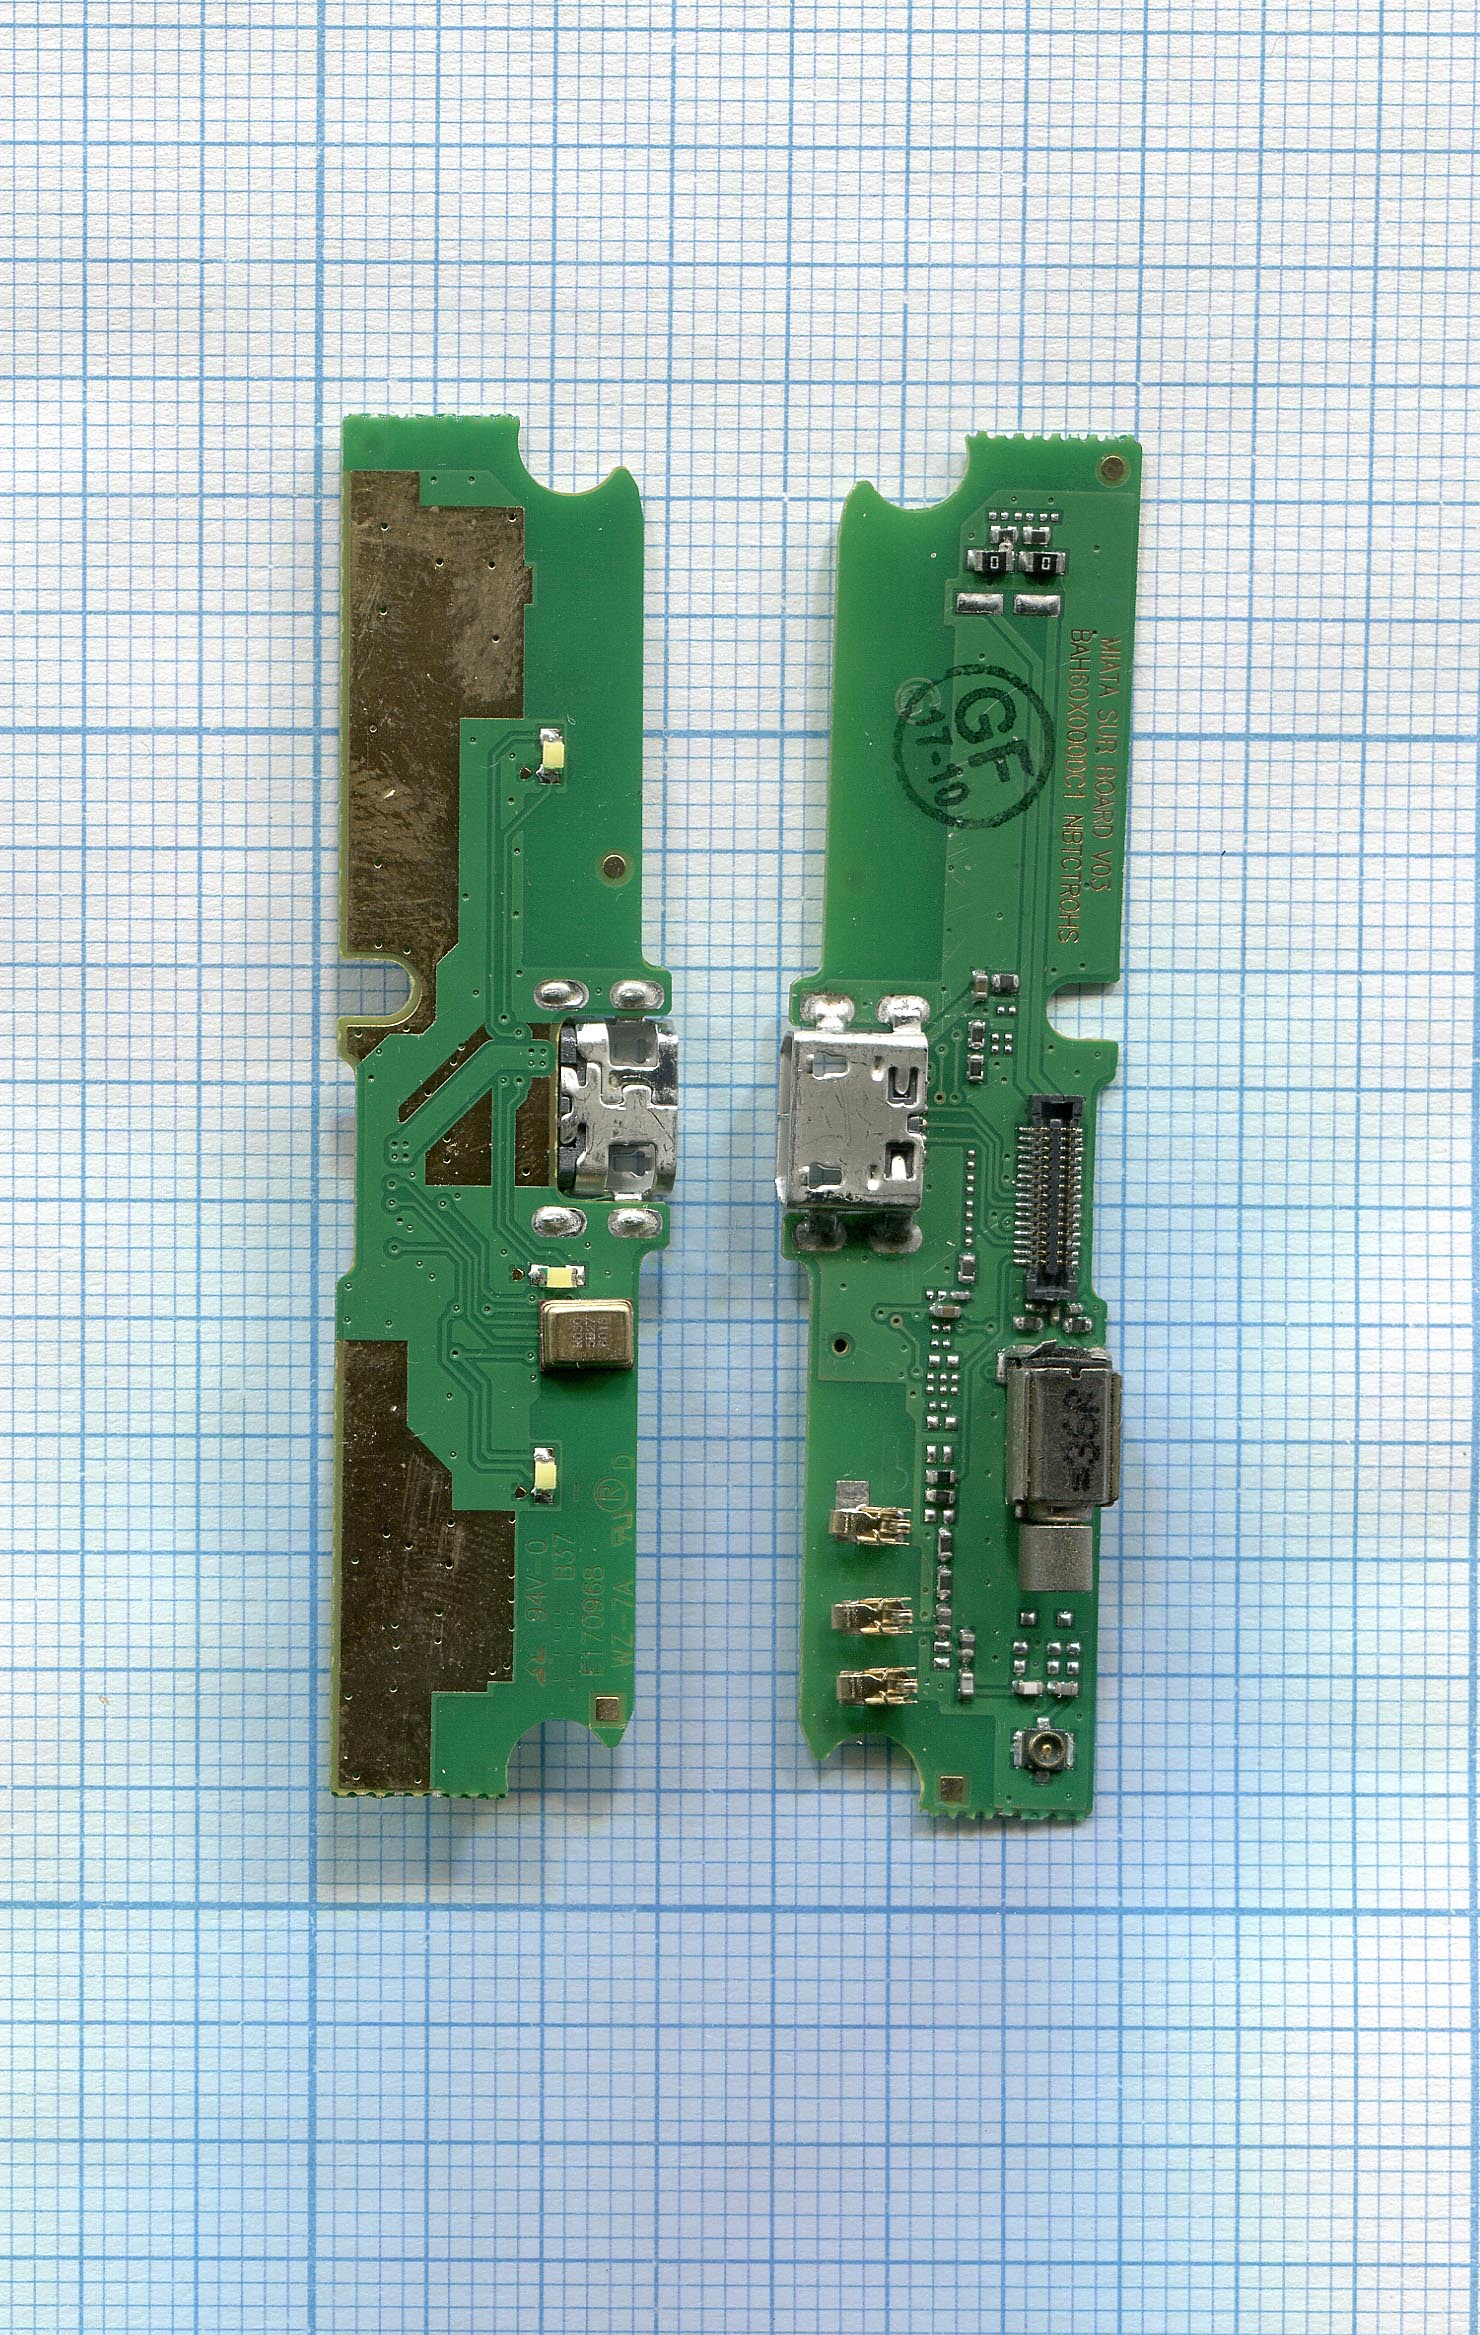 Купить разъем Micro USB для AlcateI Idol 2 Mini S 6036Y (плата с системным разъемом)